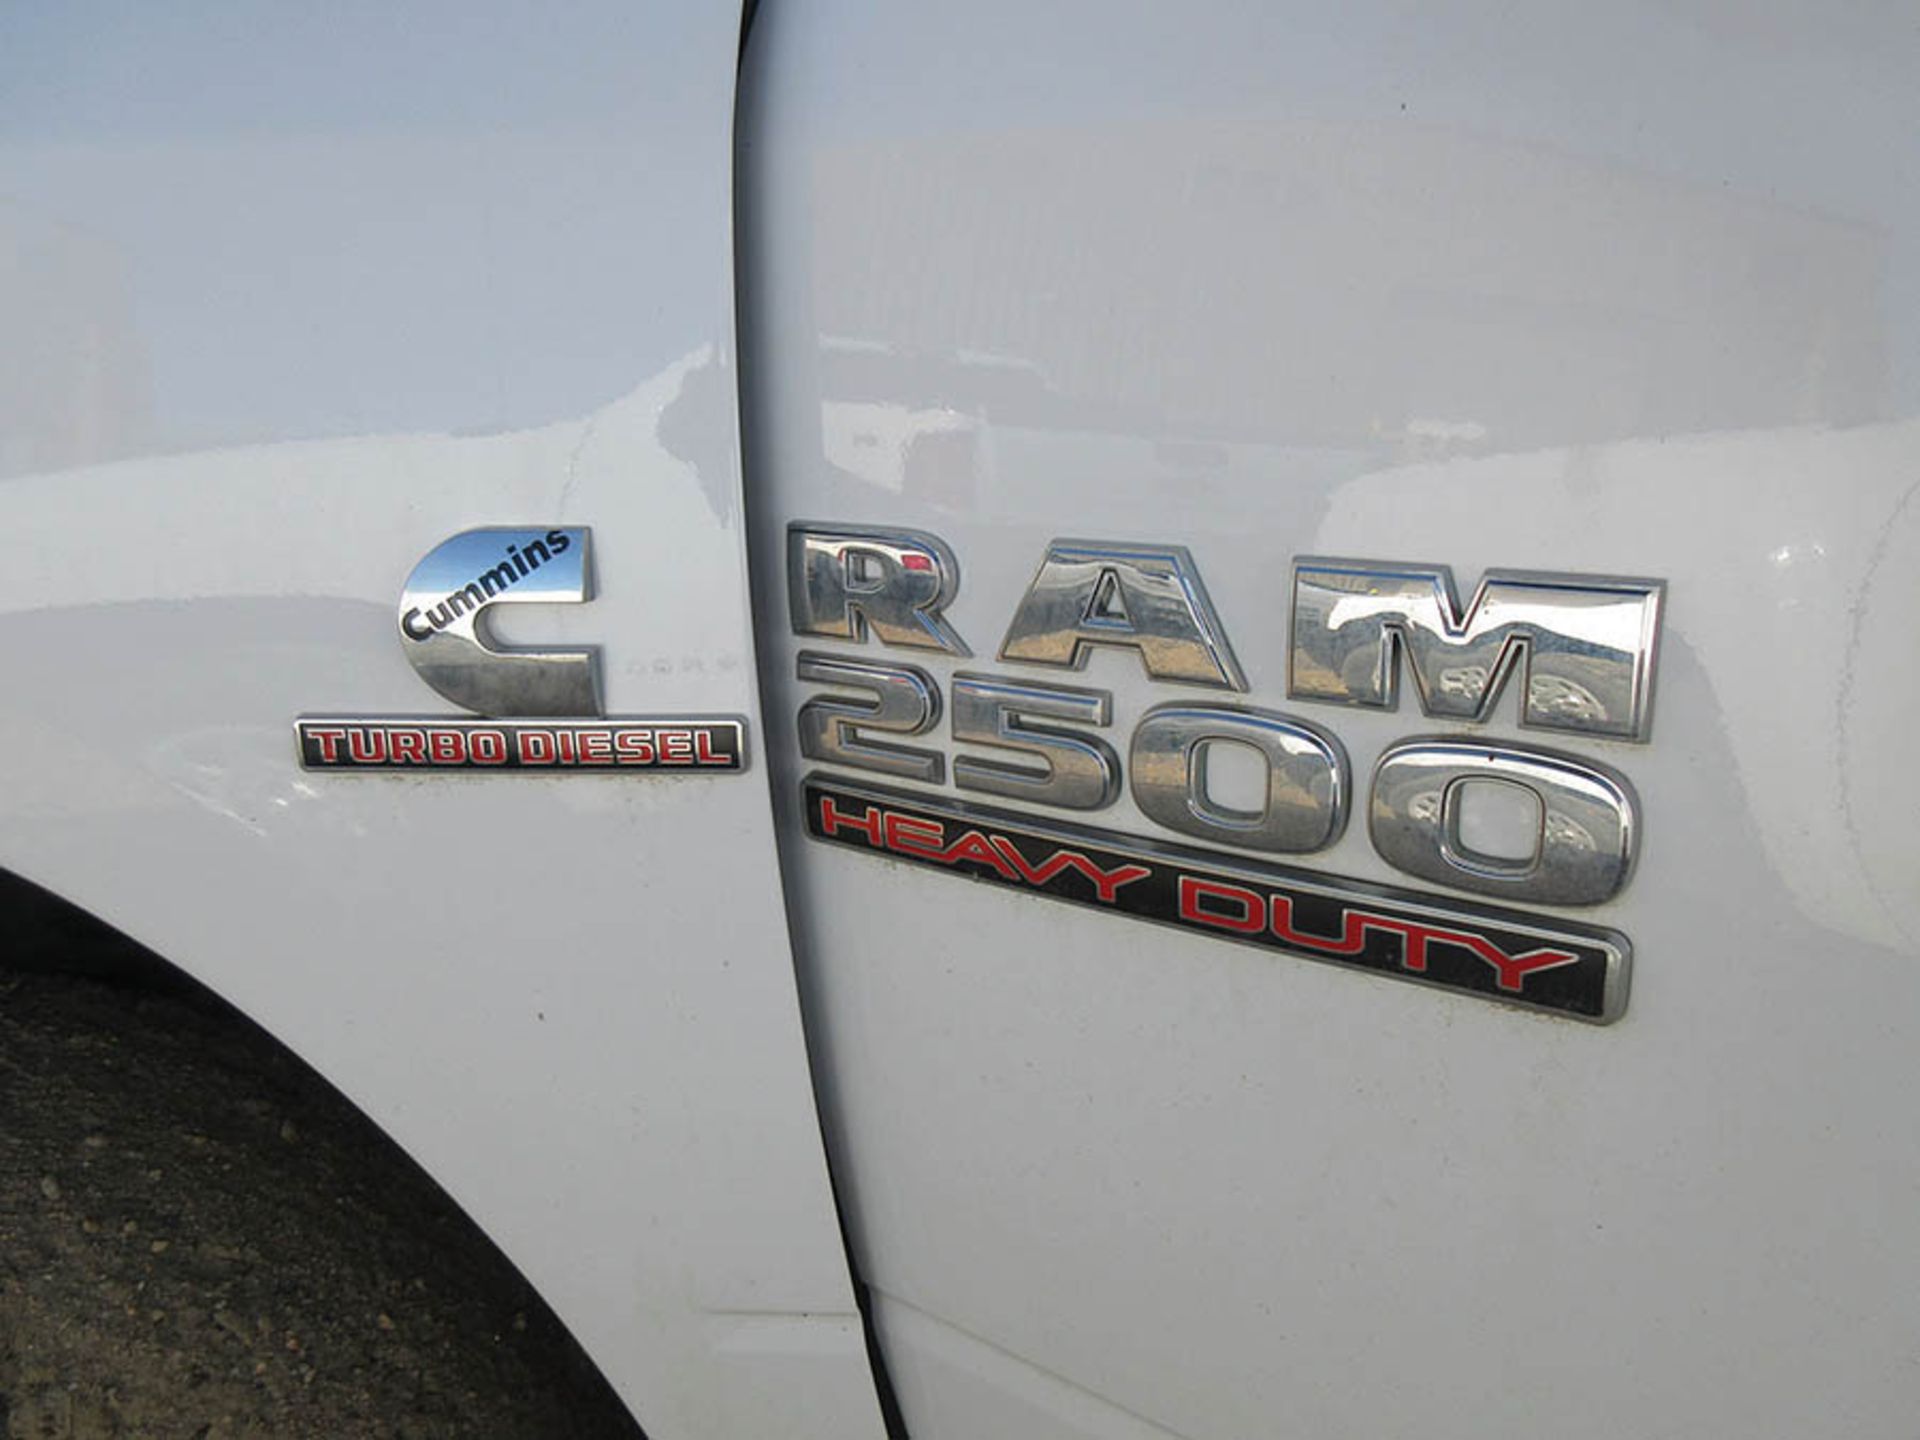 2014 WHITE DODGE RAM 2500 UTILITY TRUCK, MILES: 175,574, 4-DOOR, FUEL: DIESEL, ENGINE: CUMMINS 6.7L, - Image 14 of 17